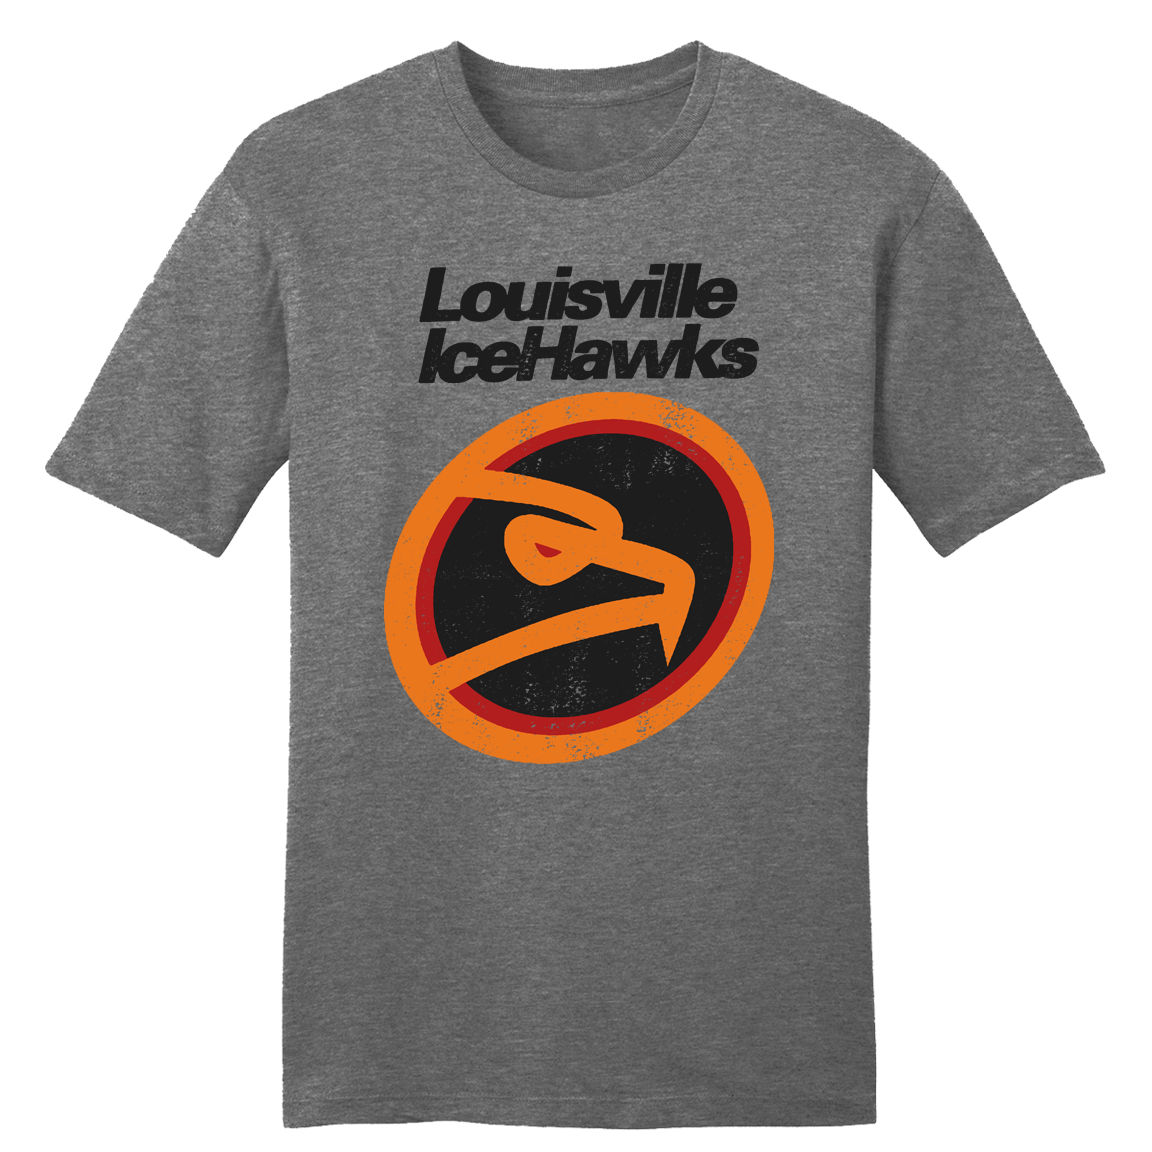 Louisville RiverFrogs Hockey Apparel  Buy Louisville RiverFrogs Jerseys,  Shirts, Hoodies & Hats - Vintage Ice Hockey